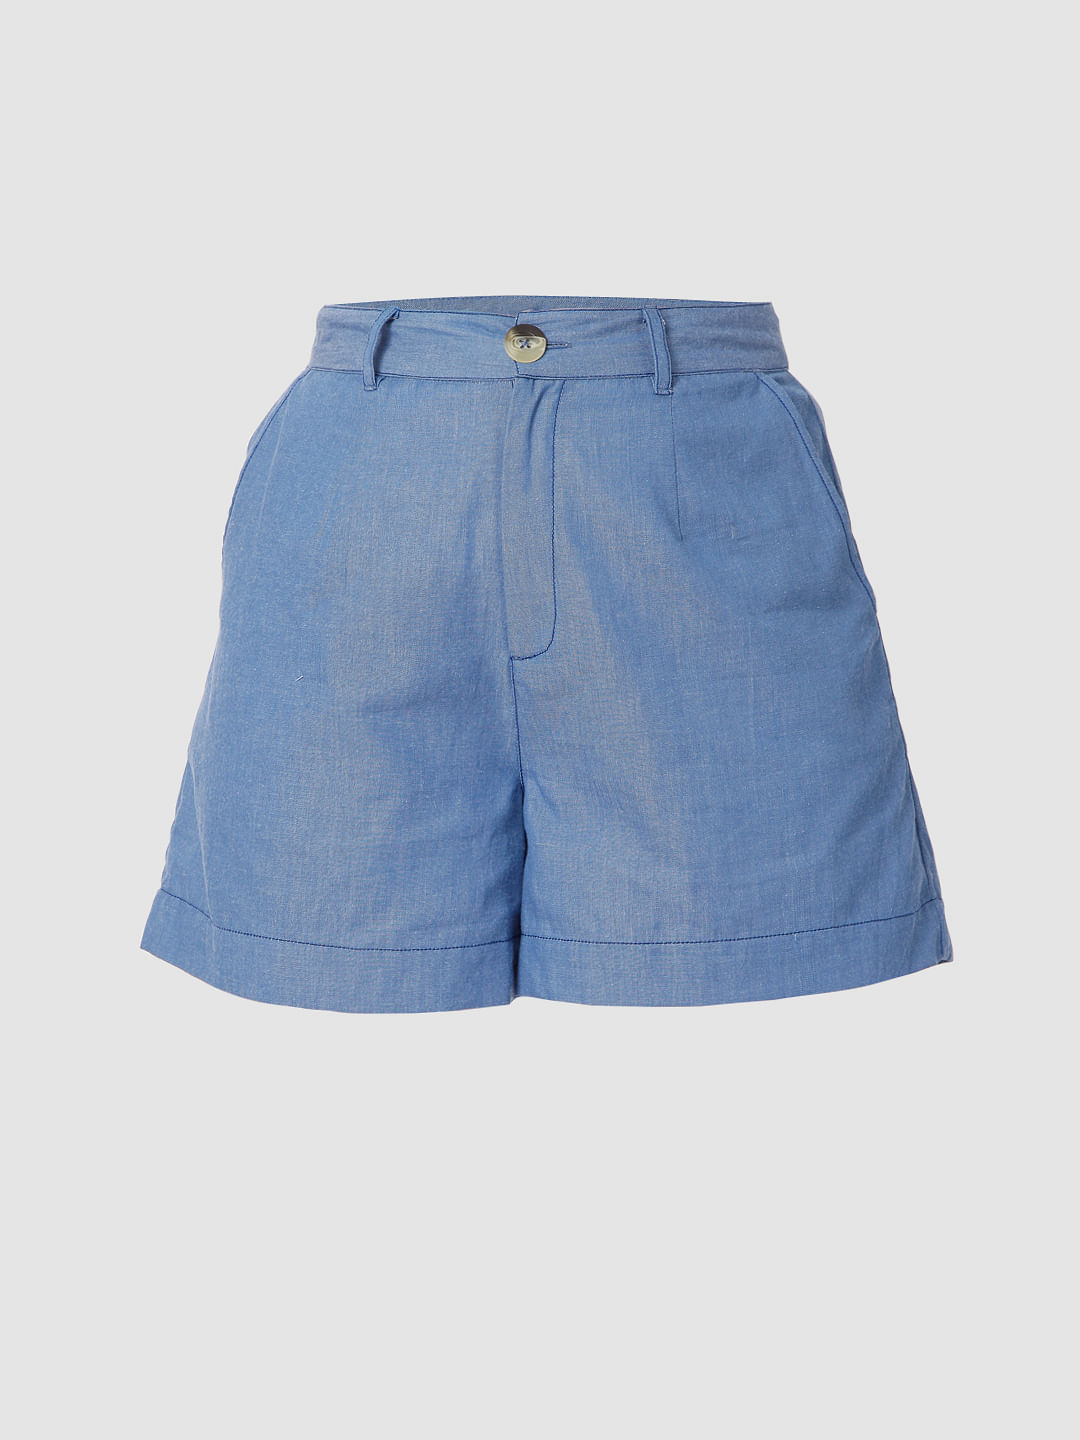 Ripped Elastic High Waist Basic Jean Shorts - Blue / XL | Vintage denim  shorts, Womens high waisted shorts, Denim shorts women